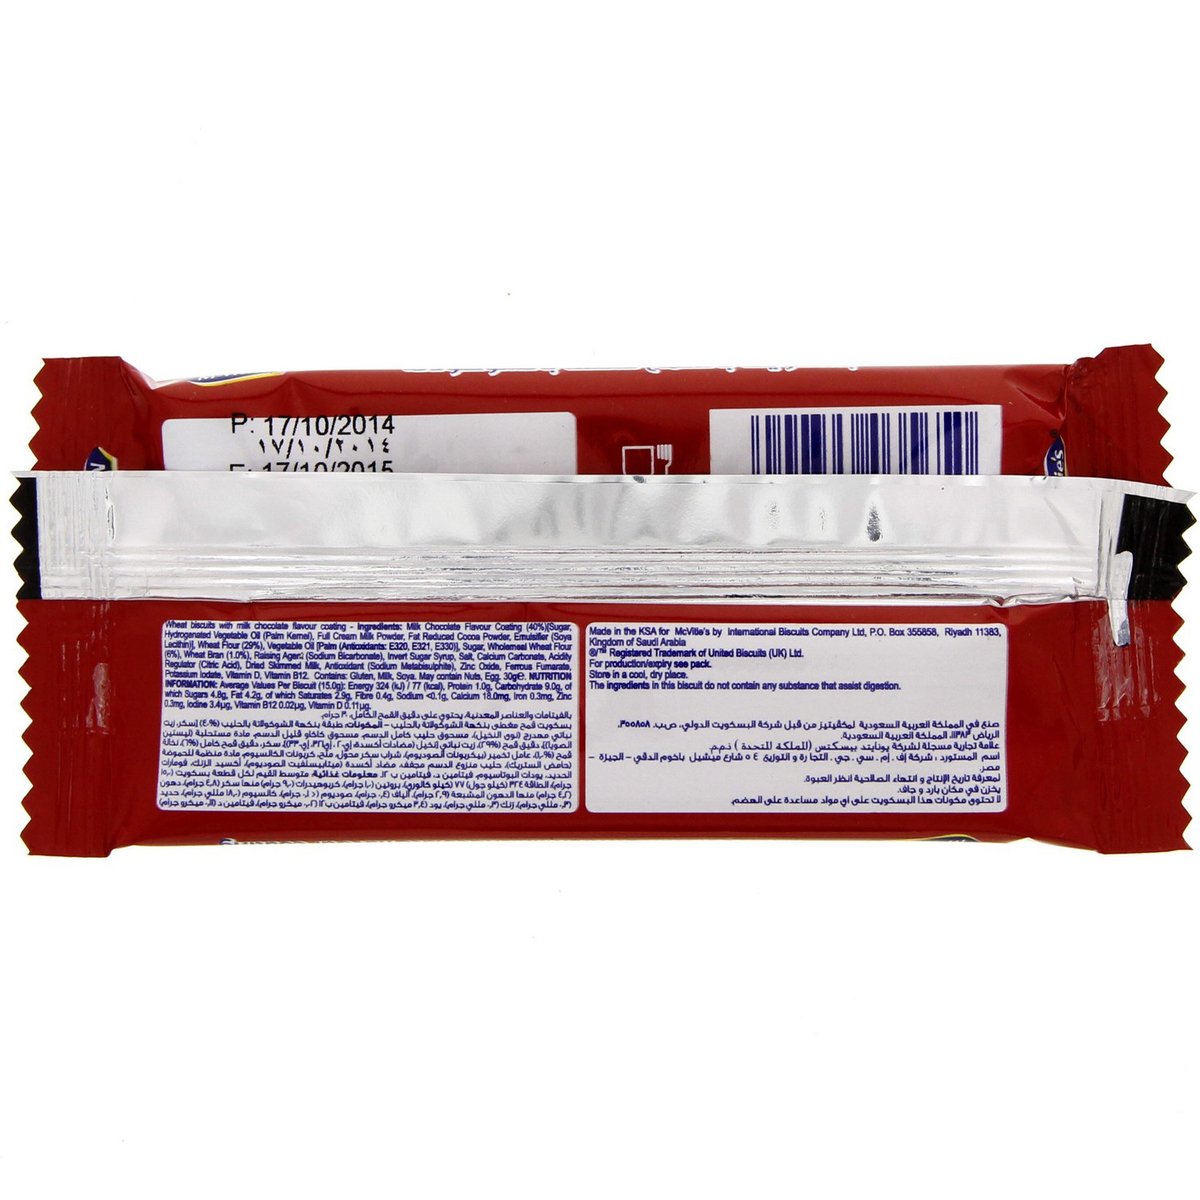 Mcvitie's Digestive Chocolate Bars 30 g